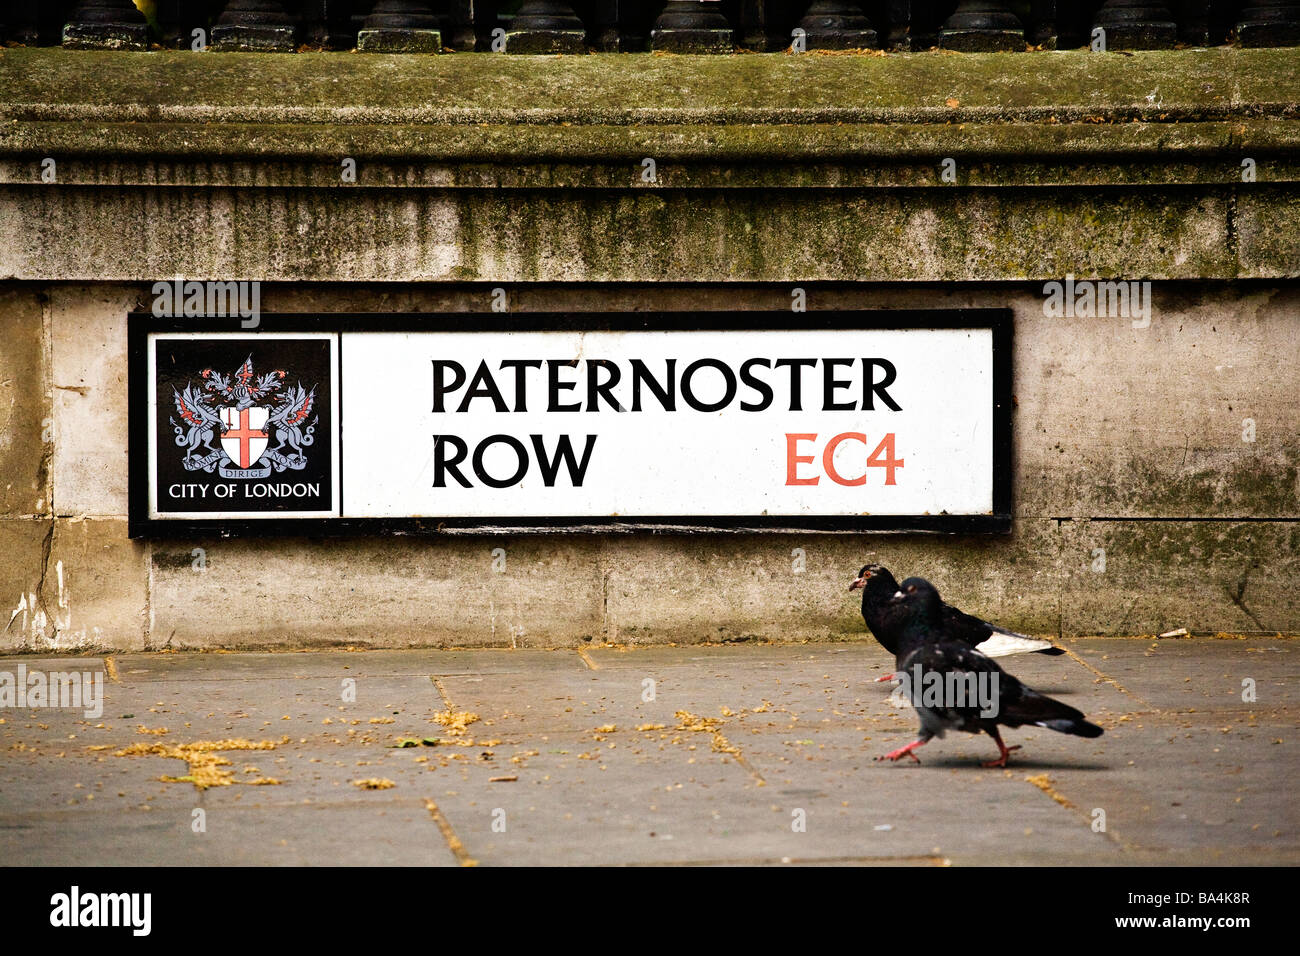 Paternoster Row, Londra, EC4 strada segno. Foto Stock